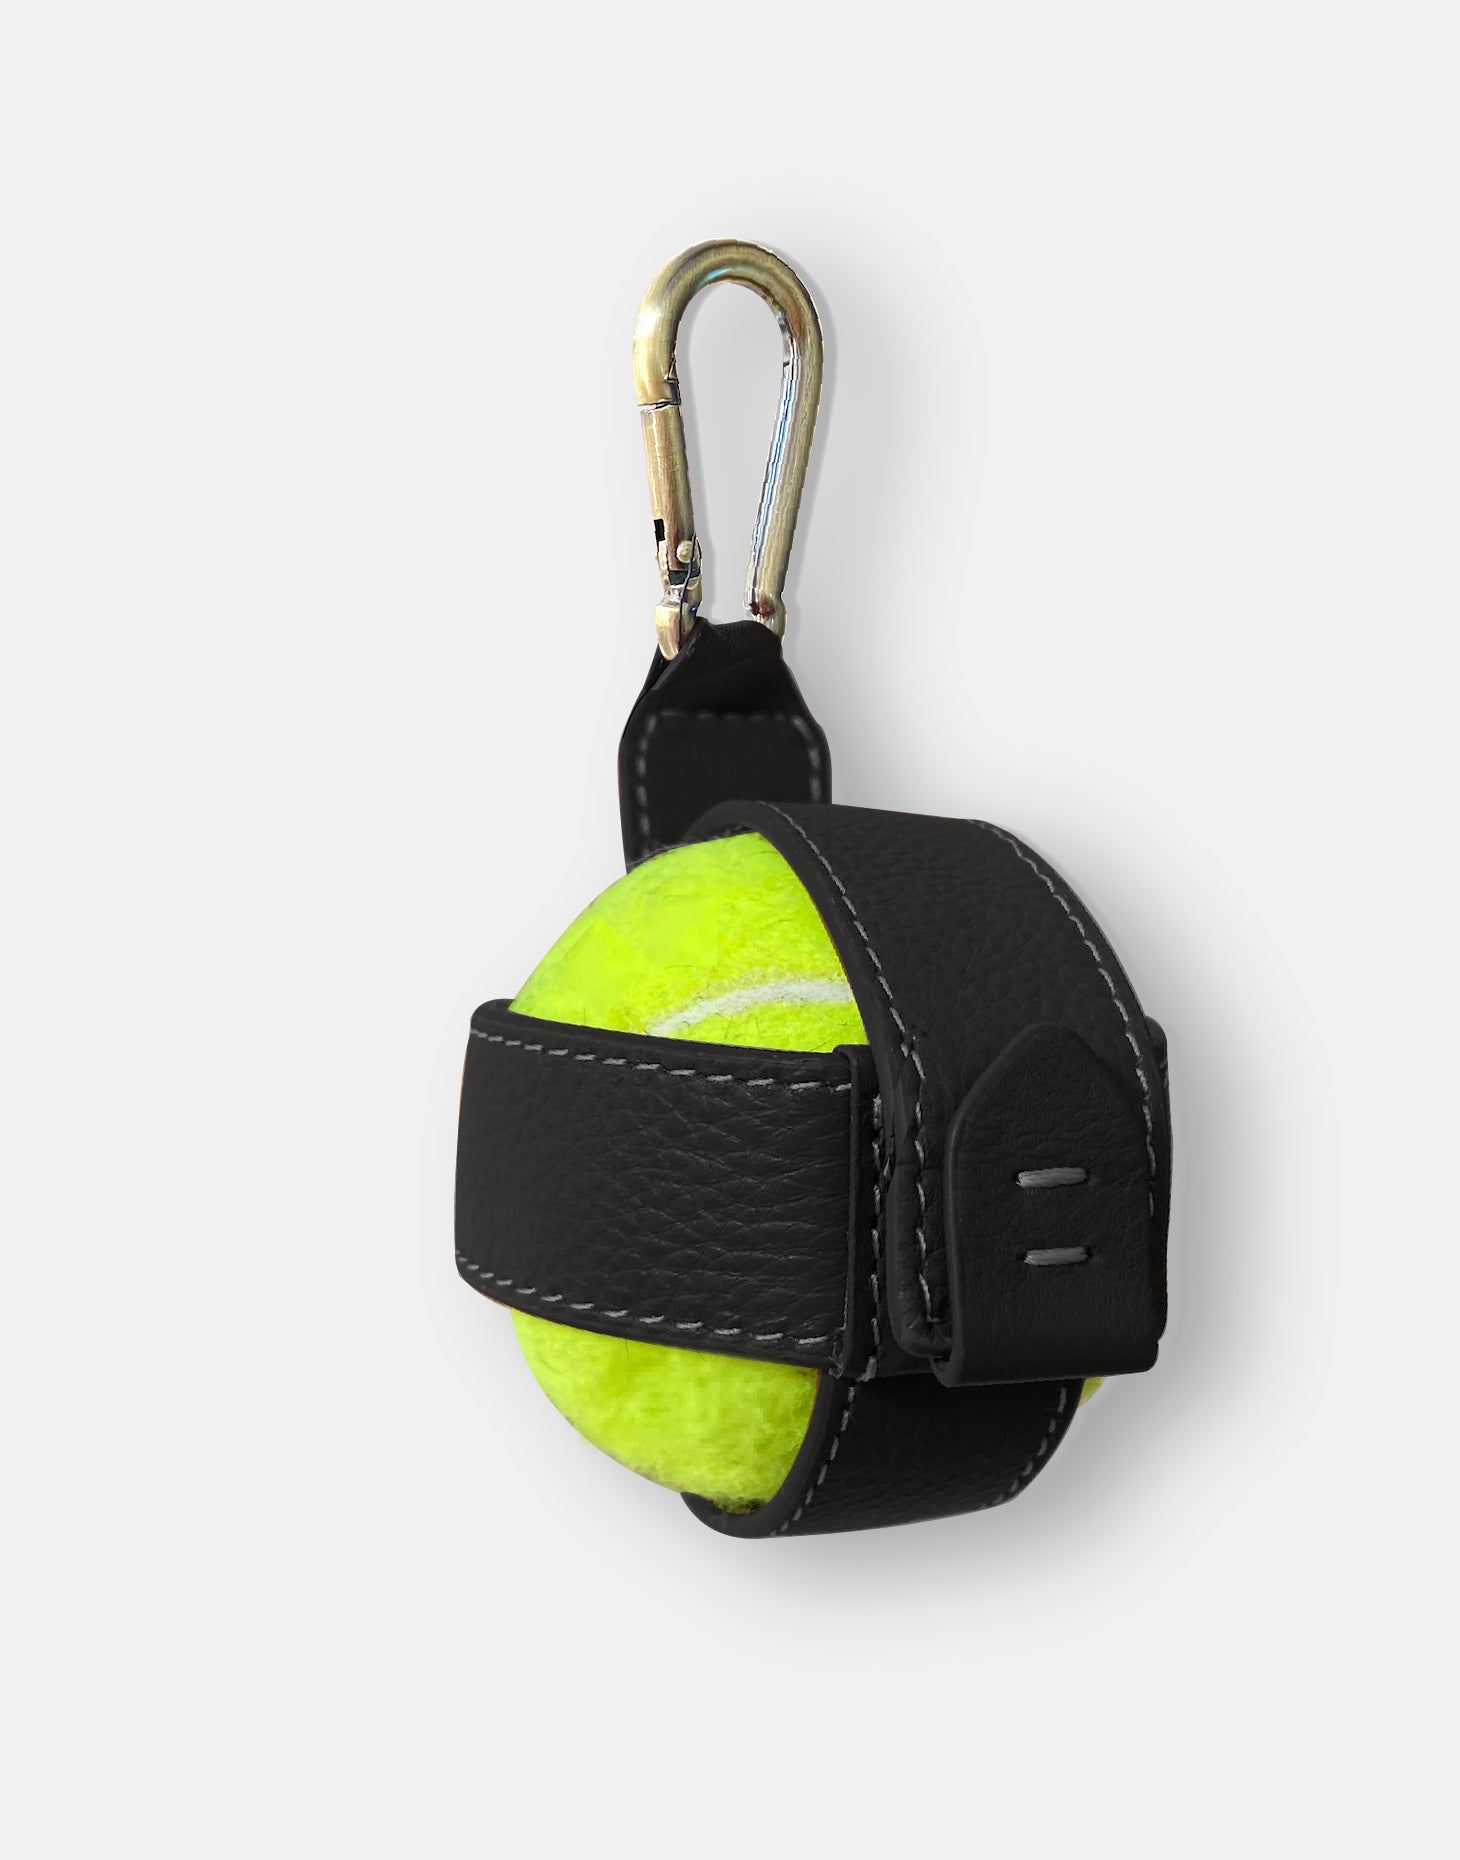 Leather Dog Tennis Ball Holder Black